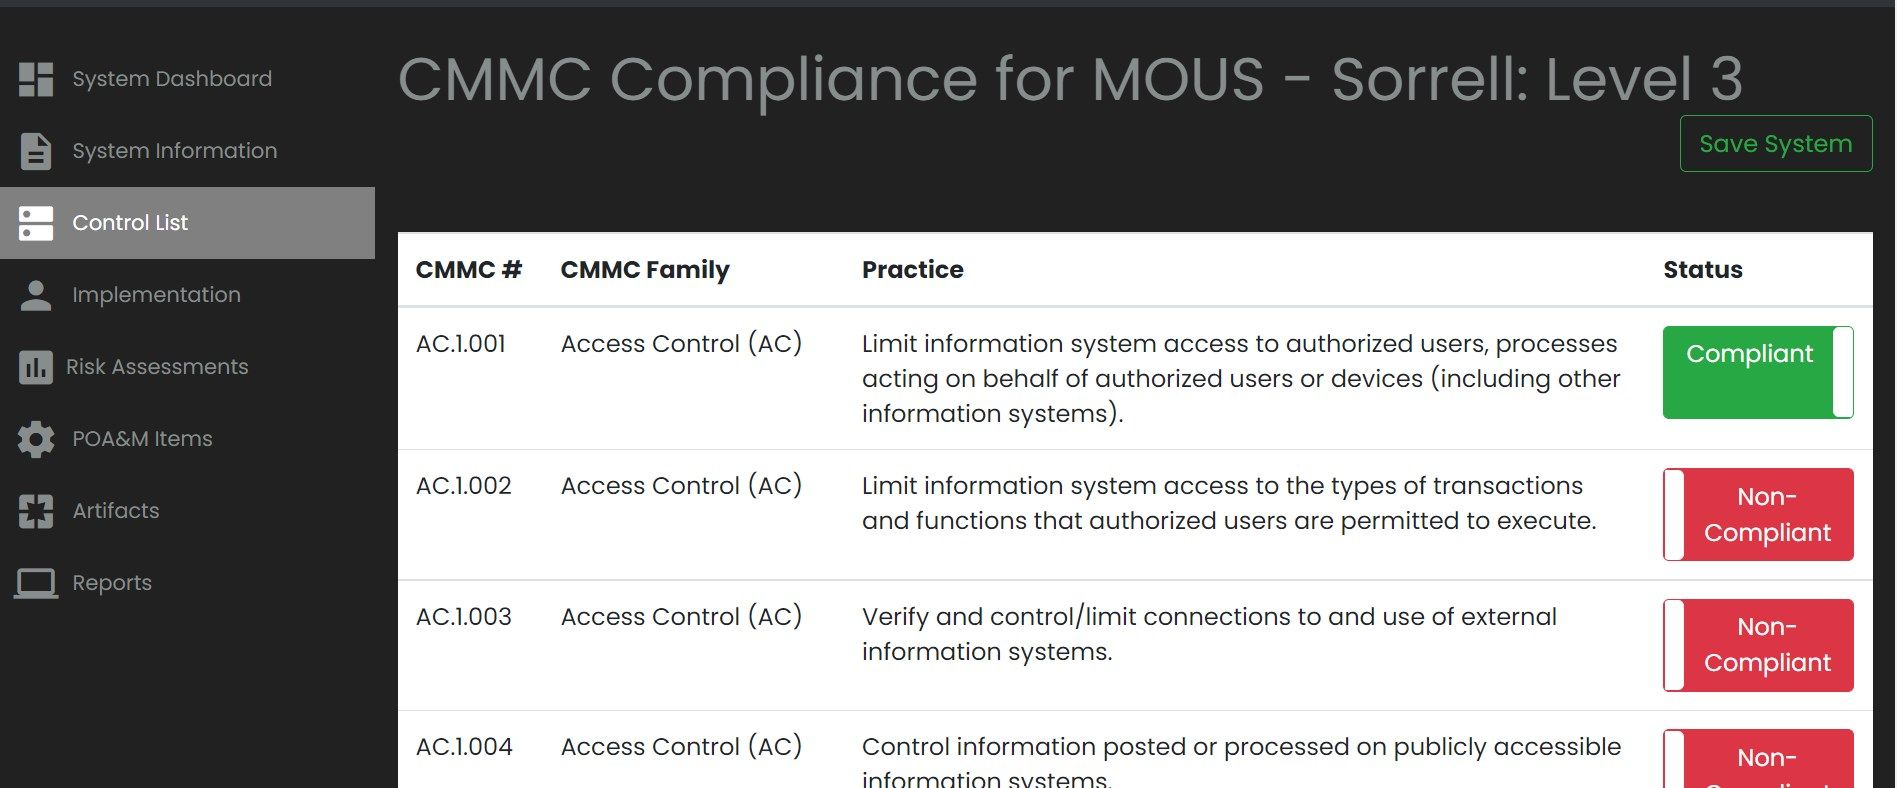 CyberProtex CMMC Compliance Manager